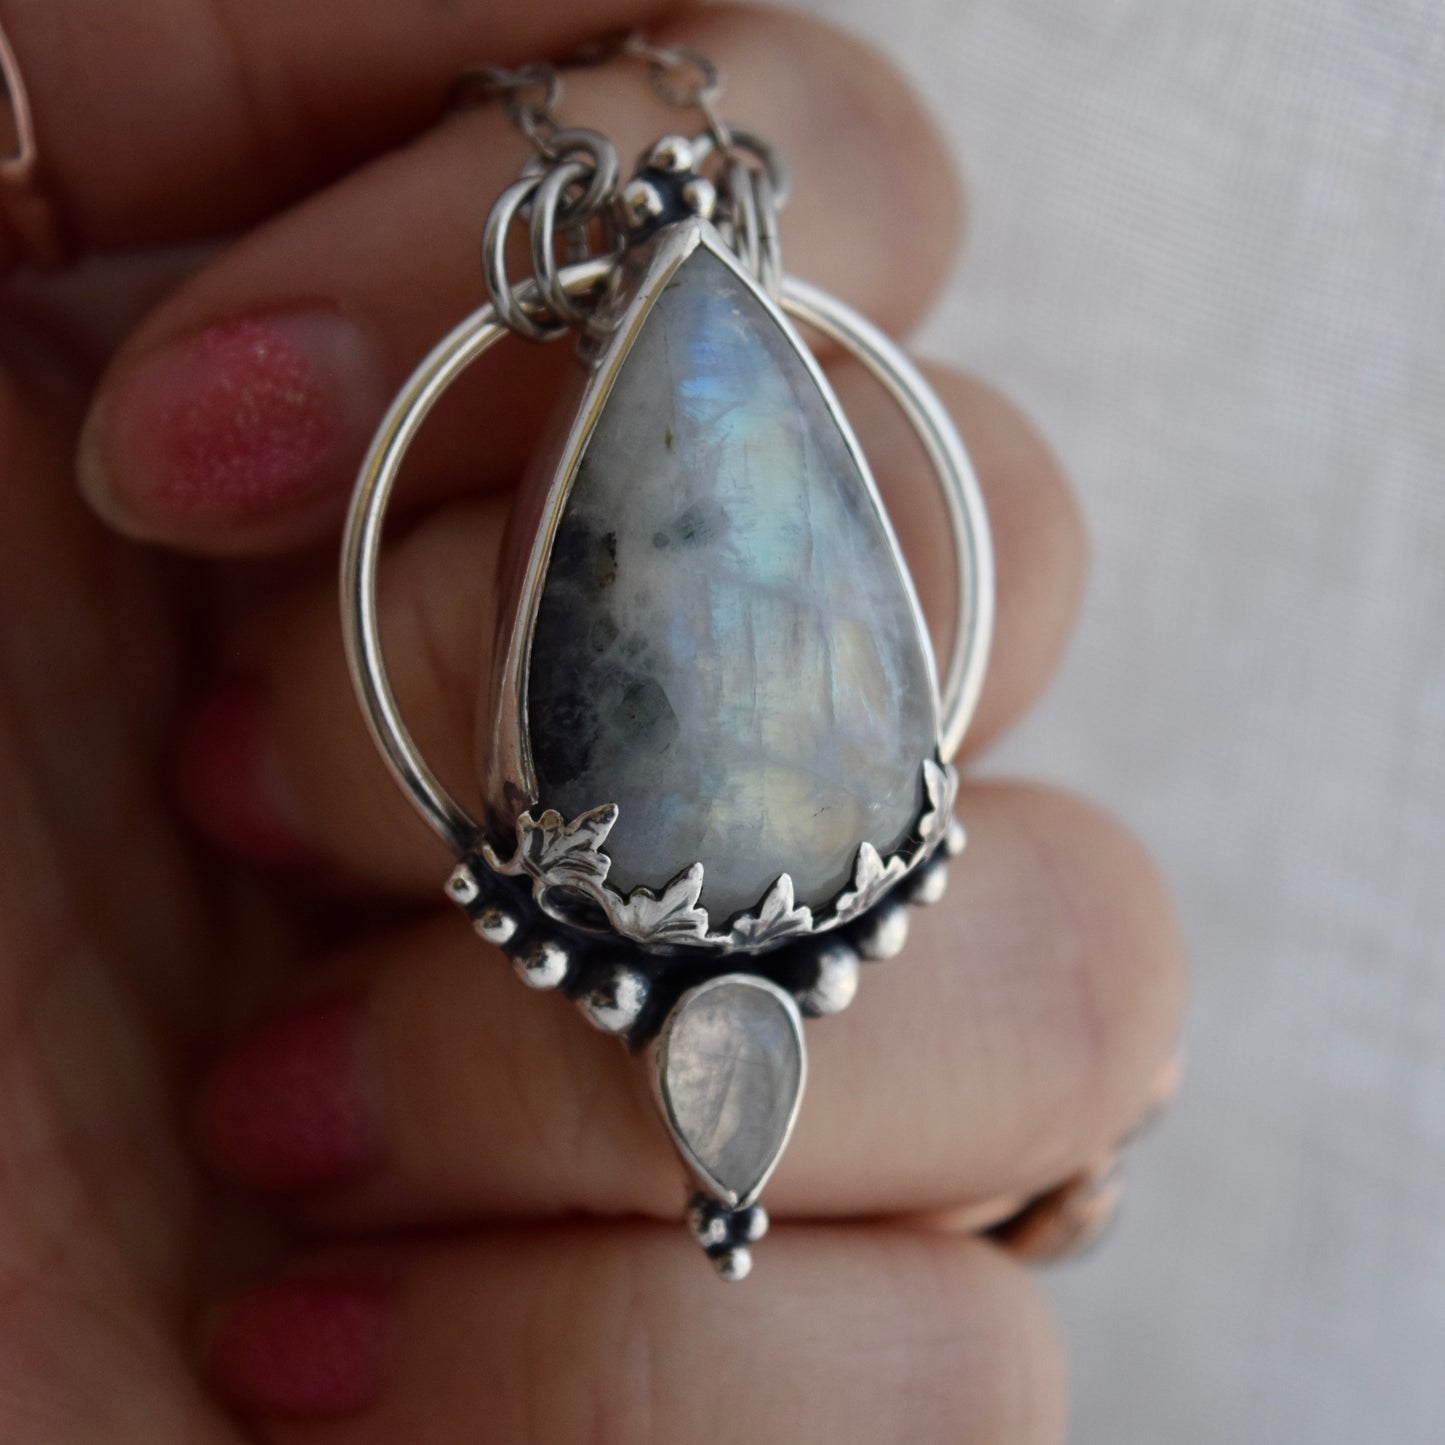 Pendulum Pendant with Rainbow Moonstone